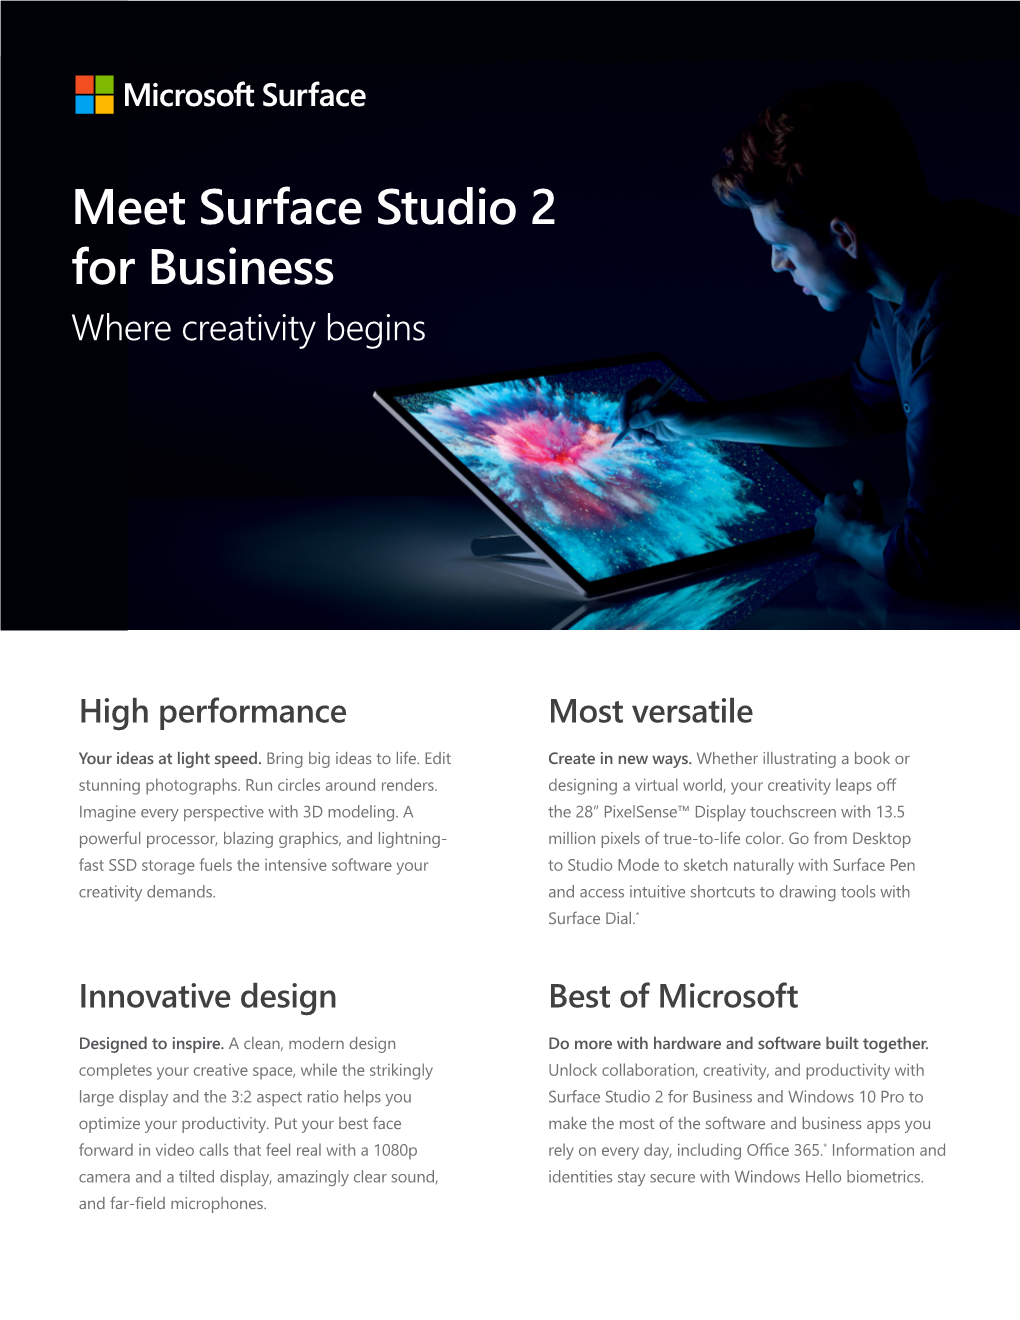 Meet Surface Studio 2 for Business Where Creativity Begins